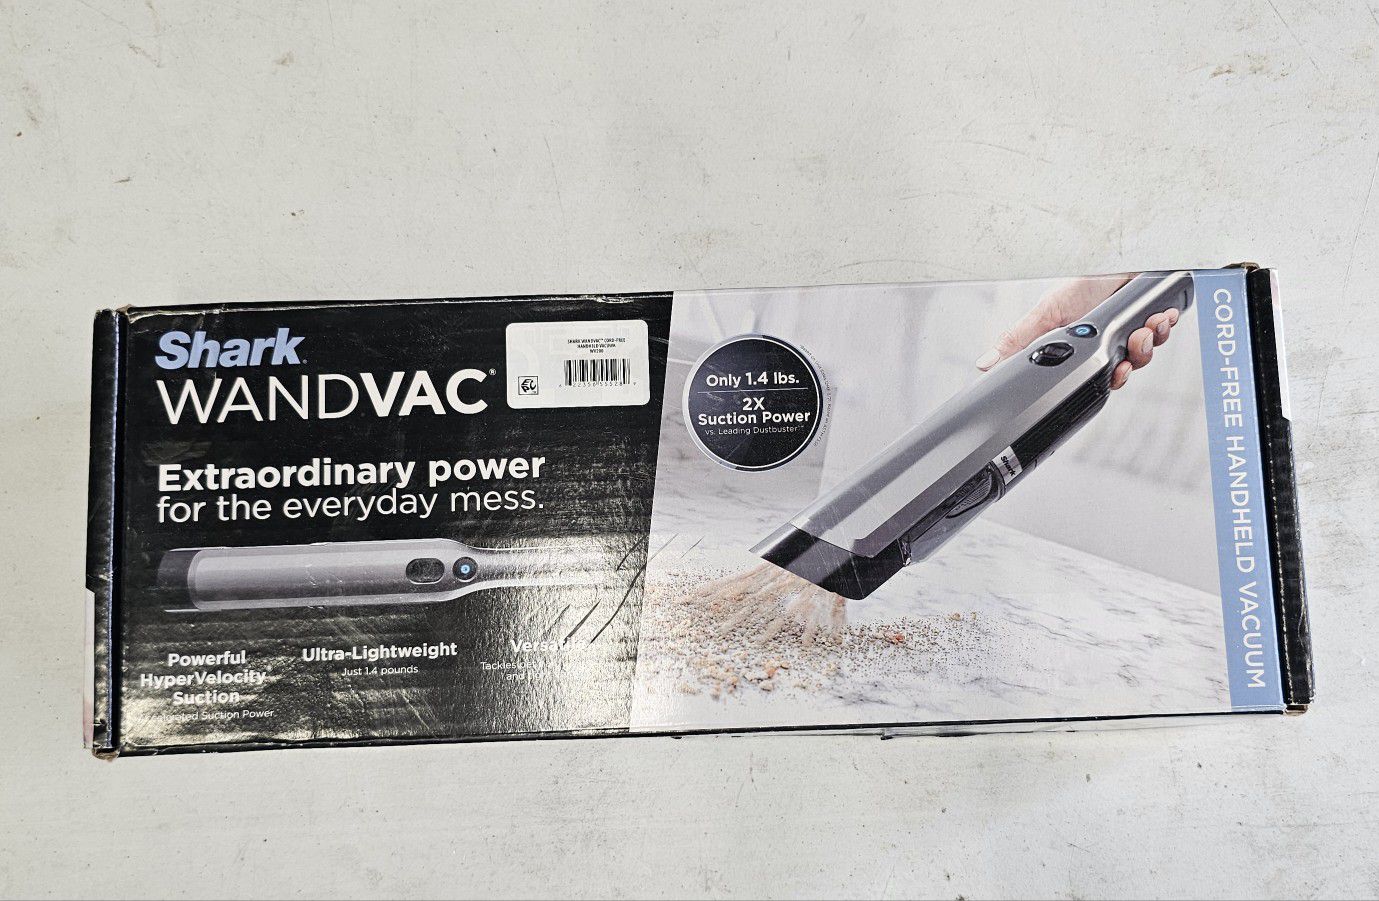 Shark Wandvac Cord-Free Handheld Vacuum, WV200

